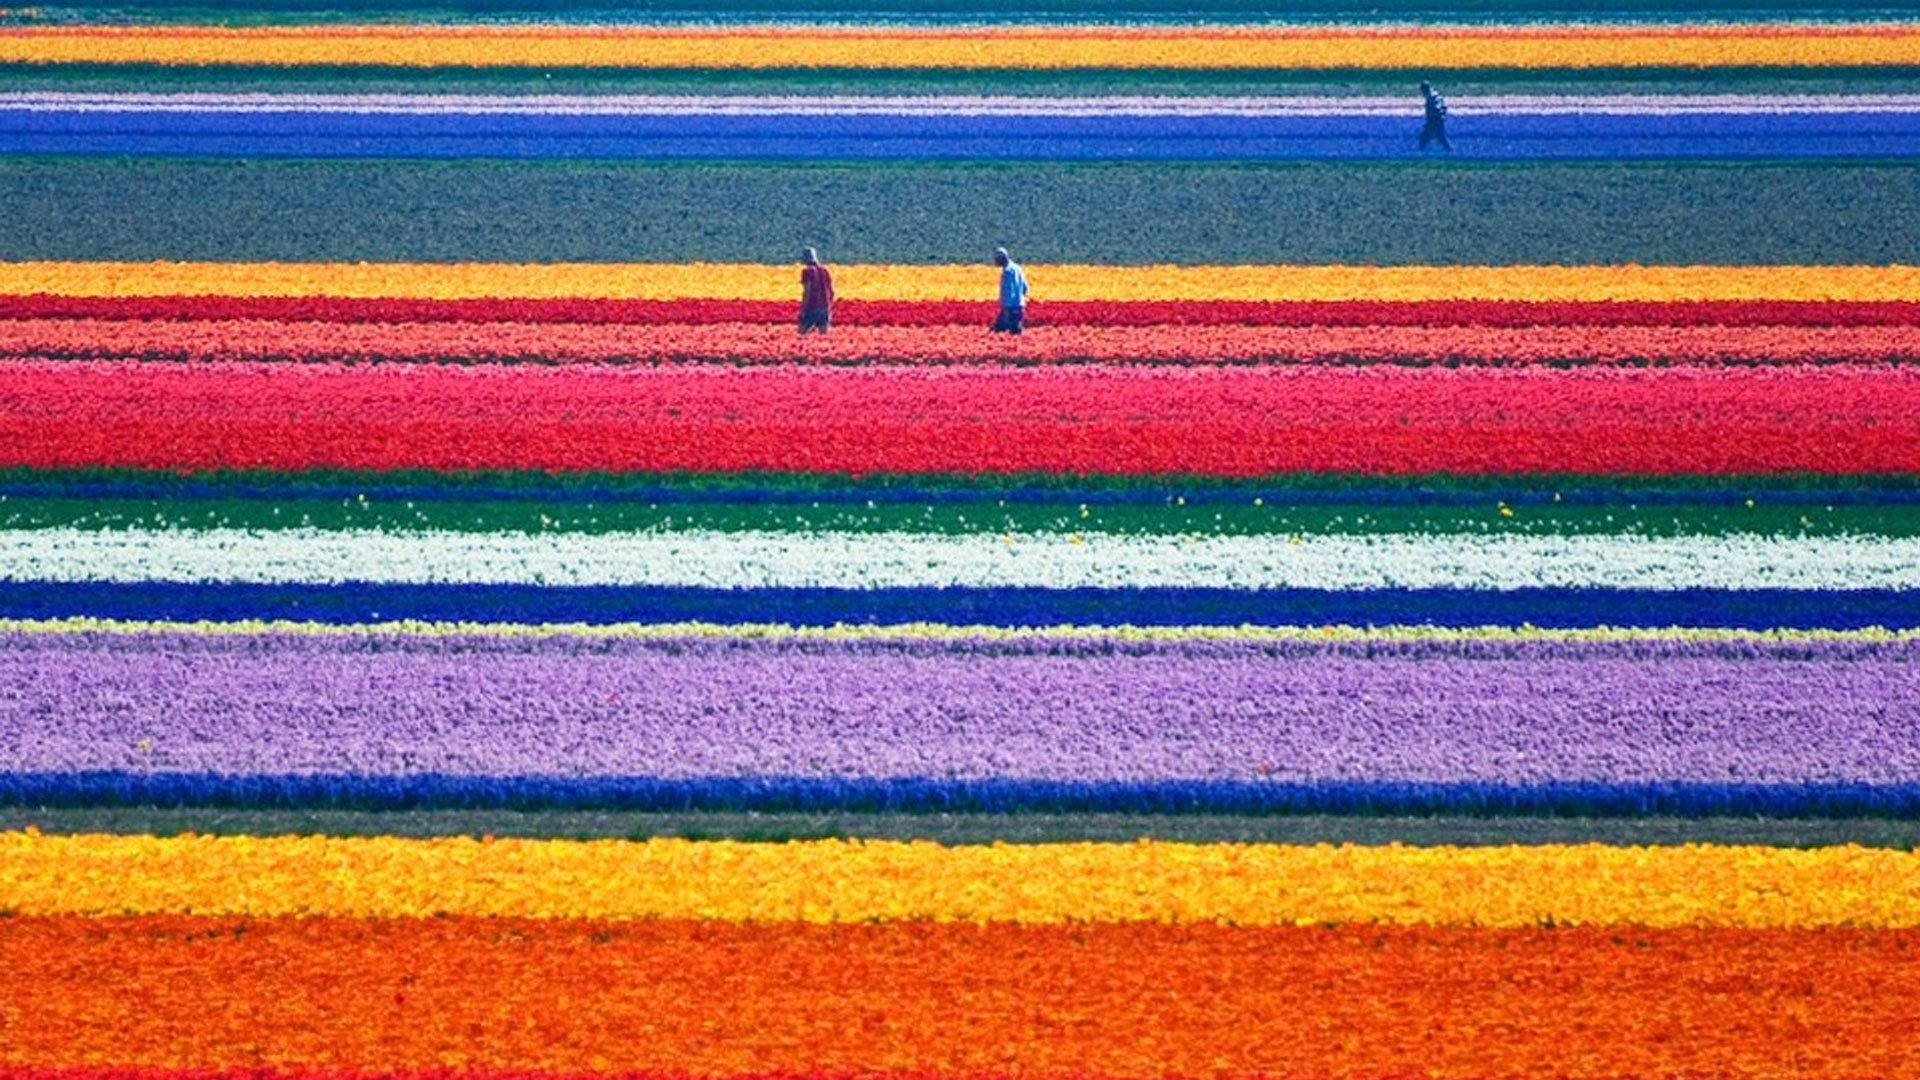 A tulip farm in Holland